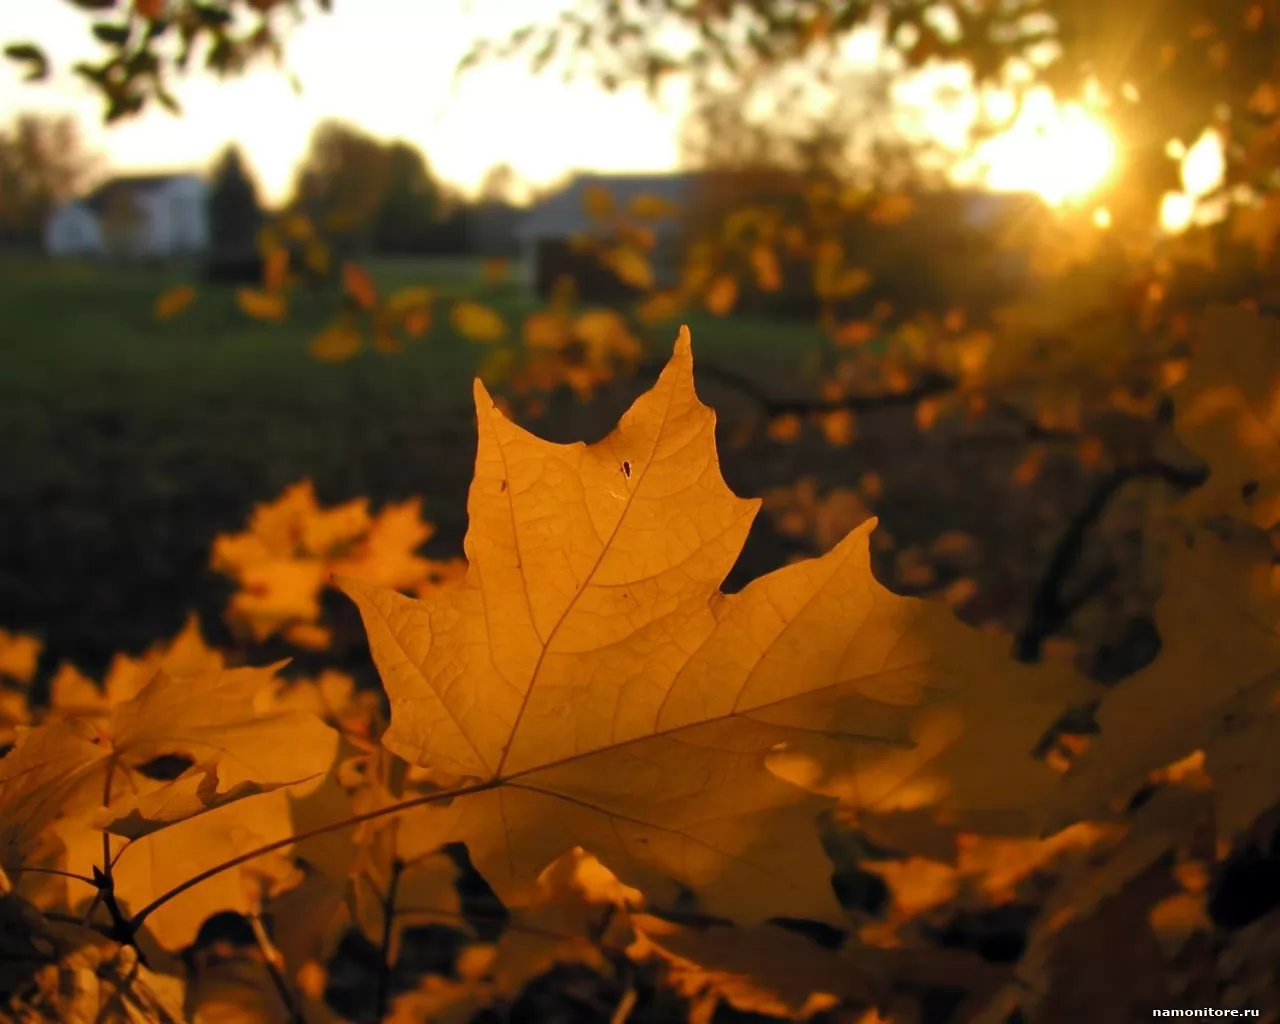 Maple leaves, autumn, golden, nature, yellow x